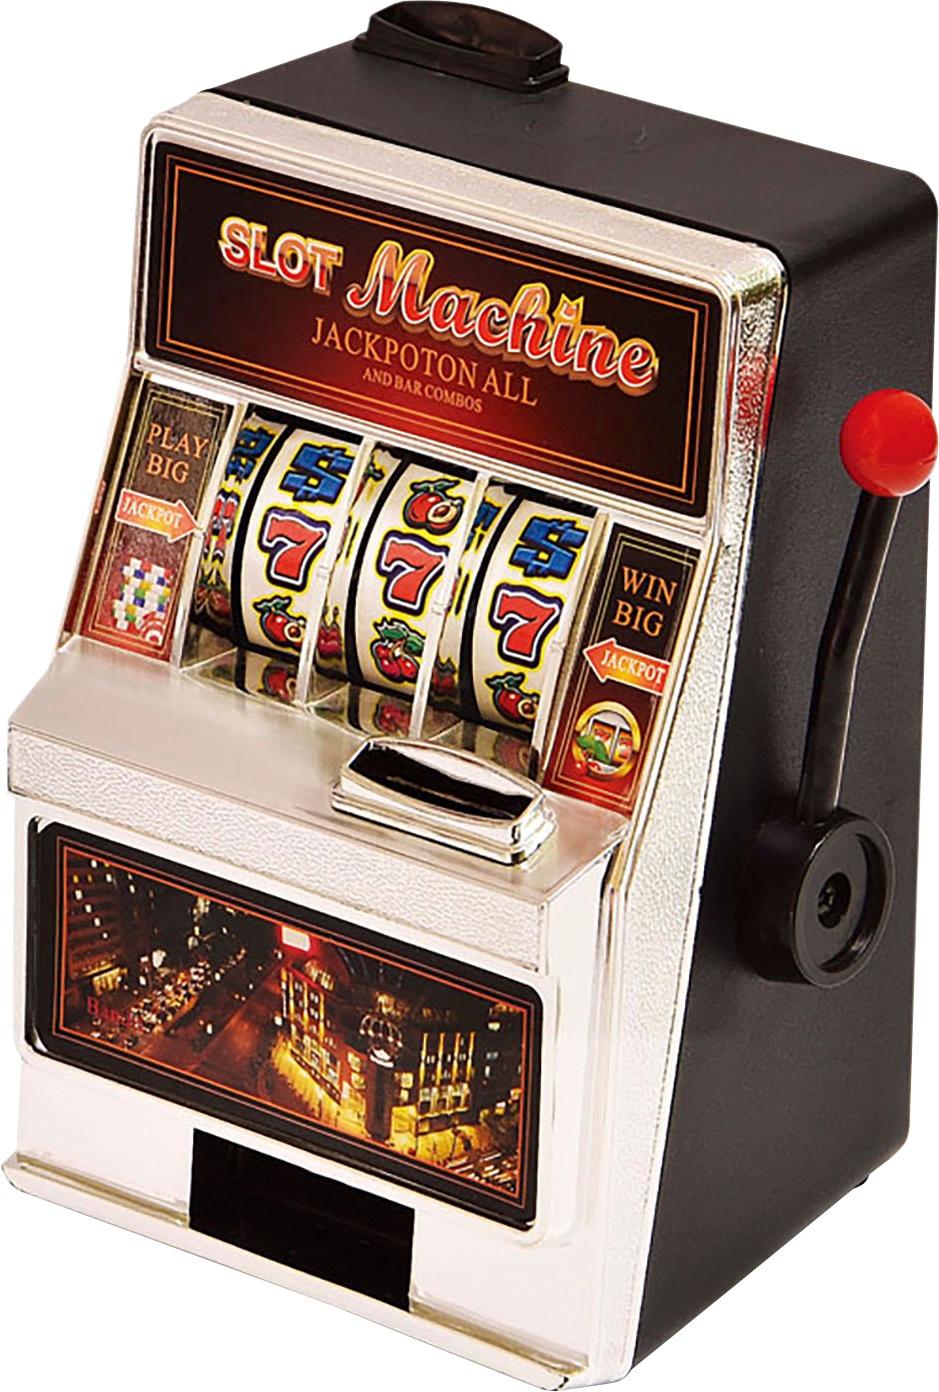 Where To Purchase A Type Ii Slot Machine